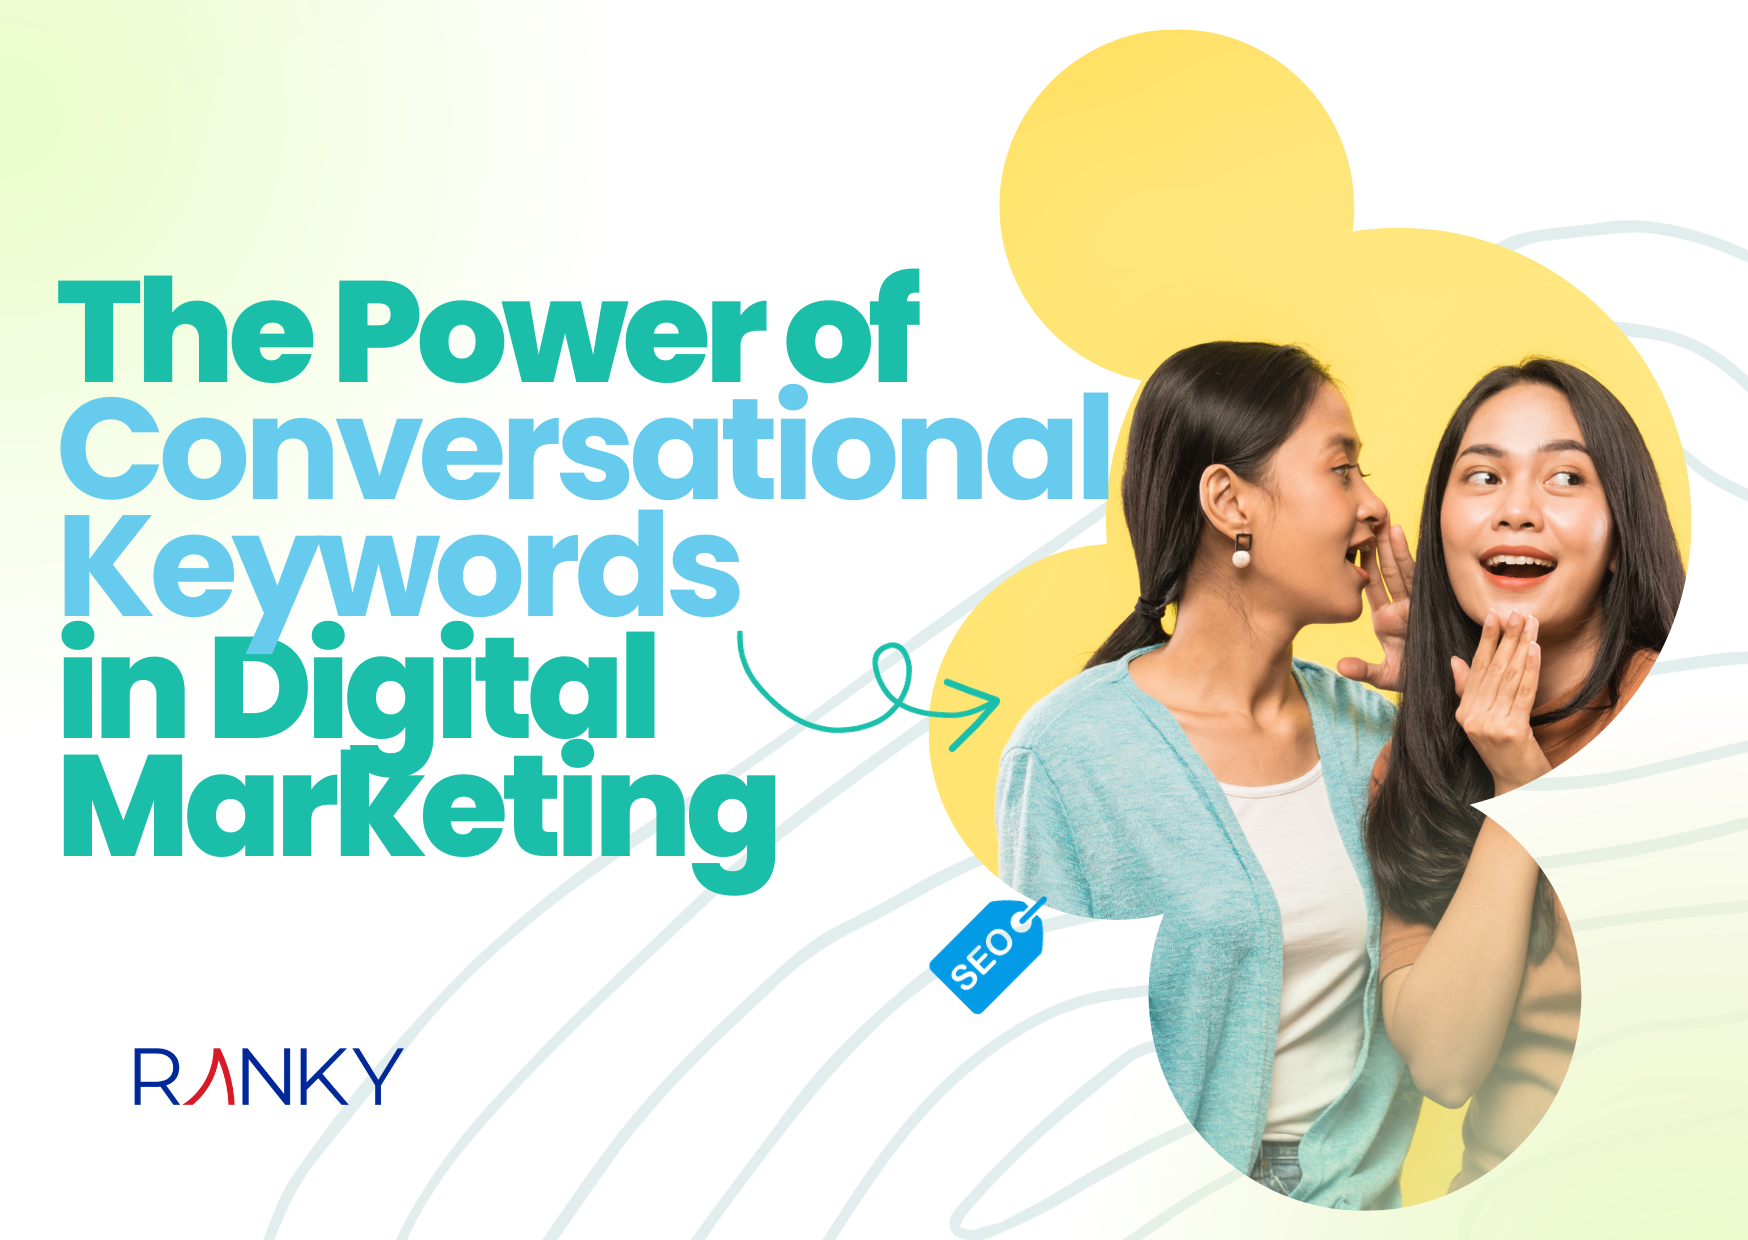 The Power of Conversational Keywords in Digital Marketing